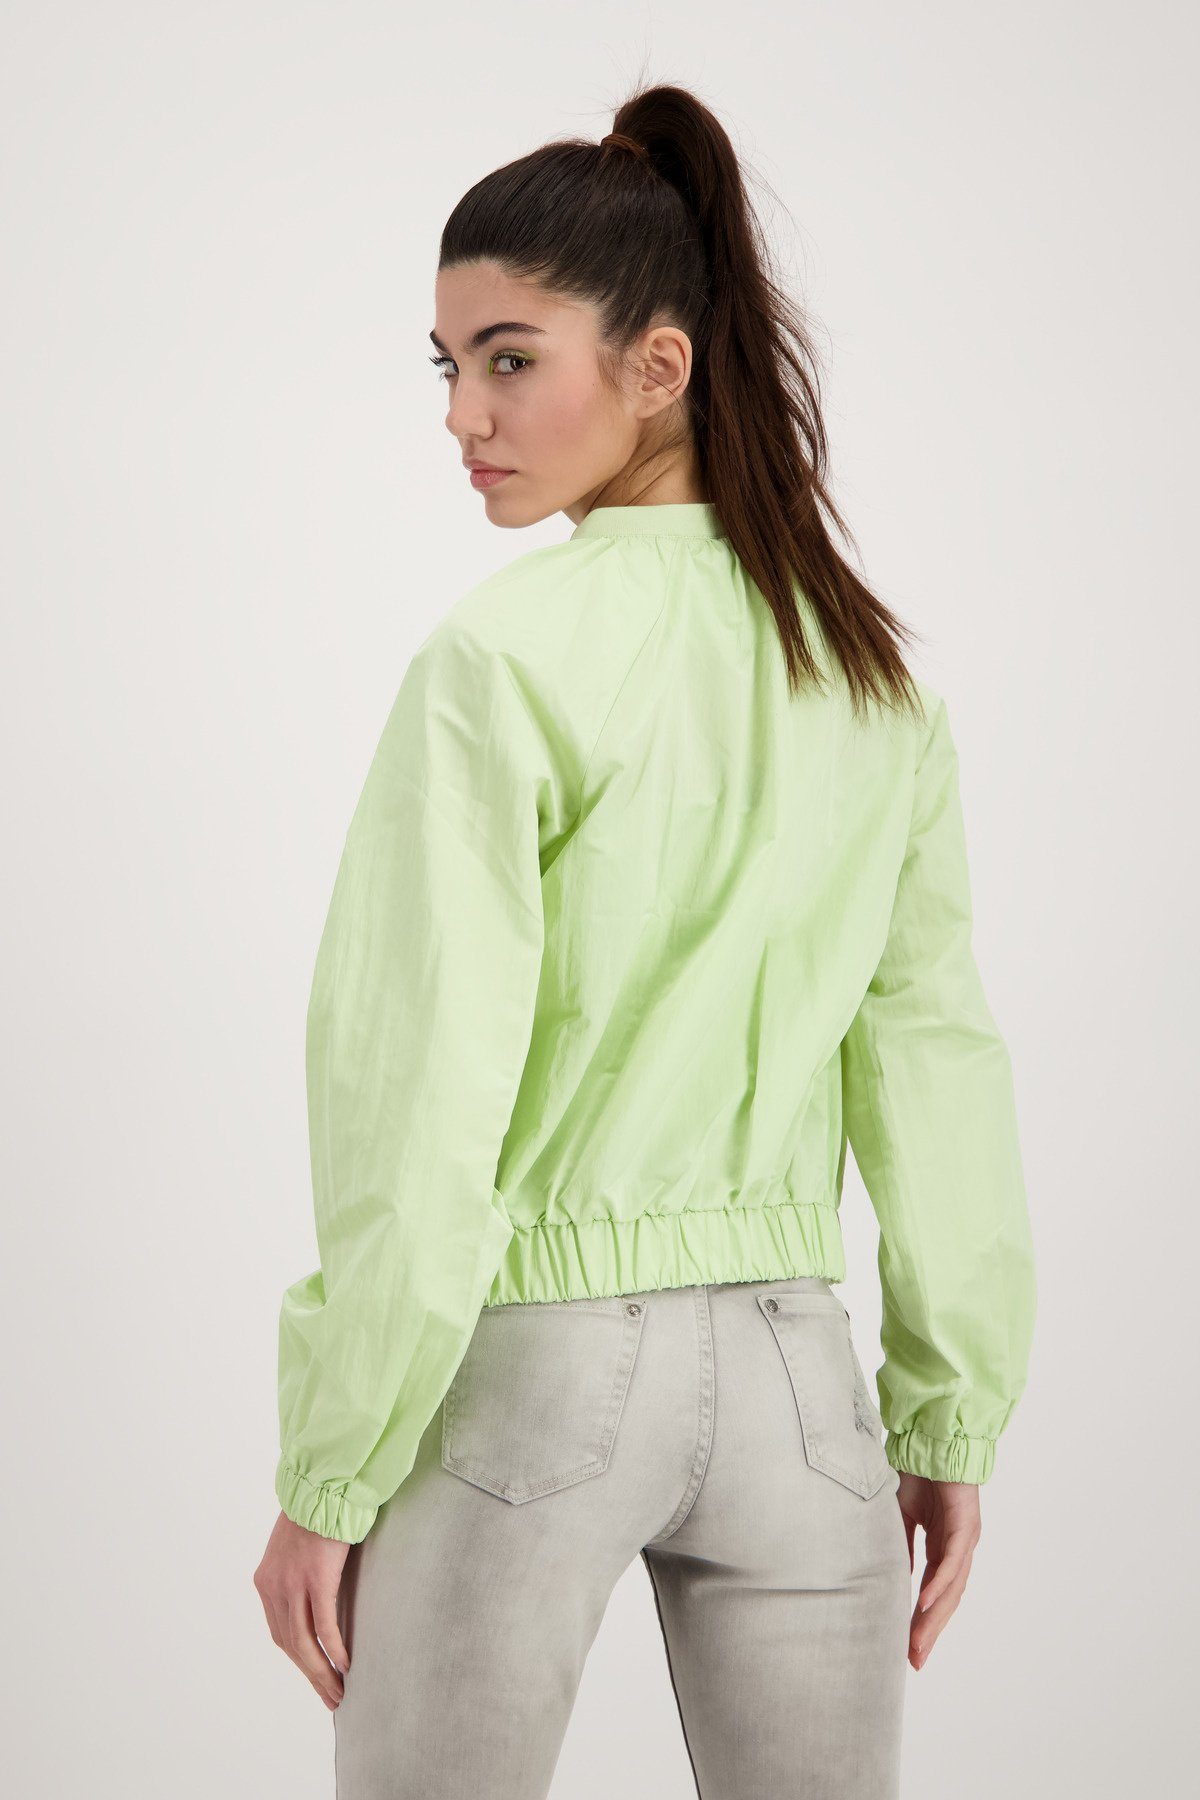 Nylon pastell Windbreaker green Jacke Stoff aus Monari